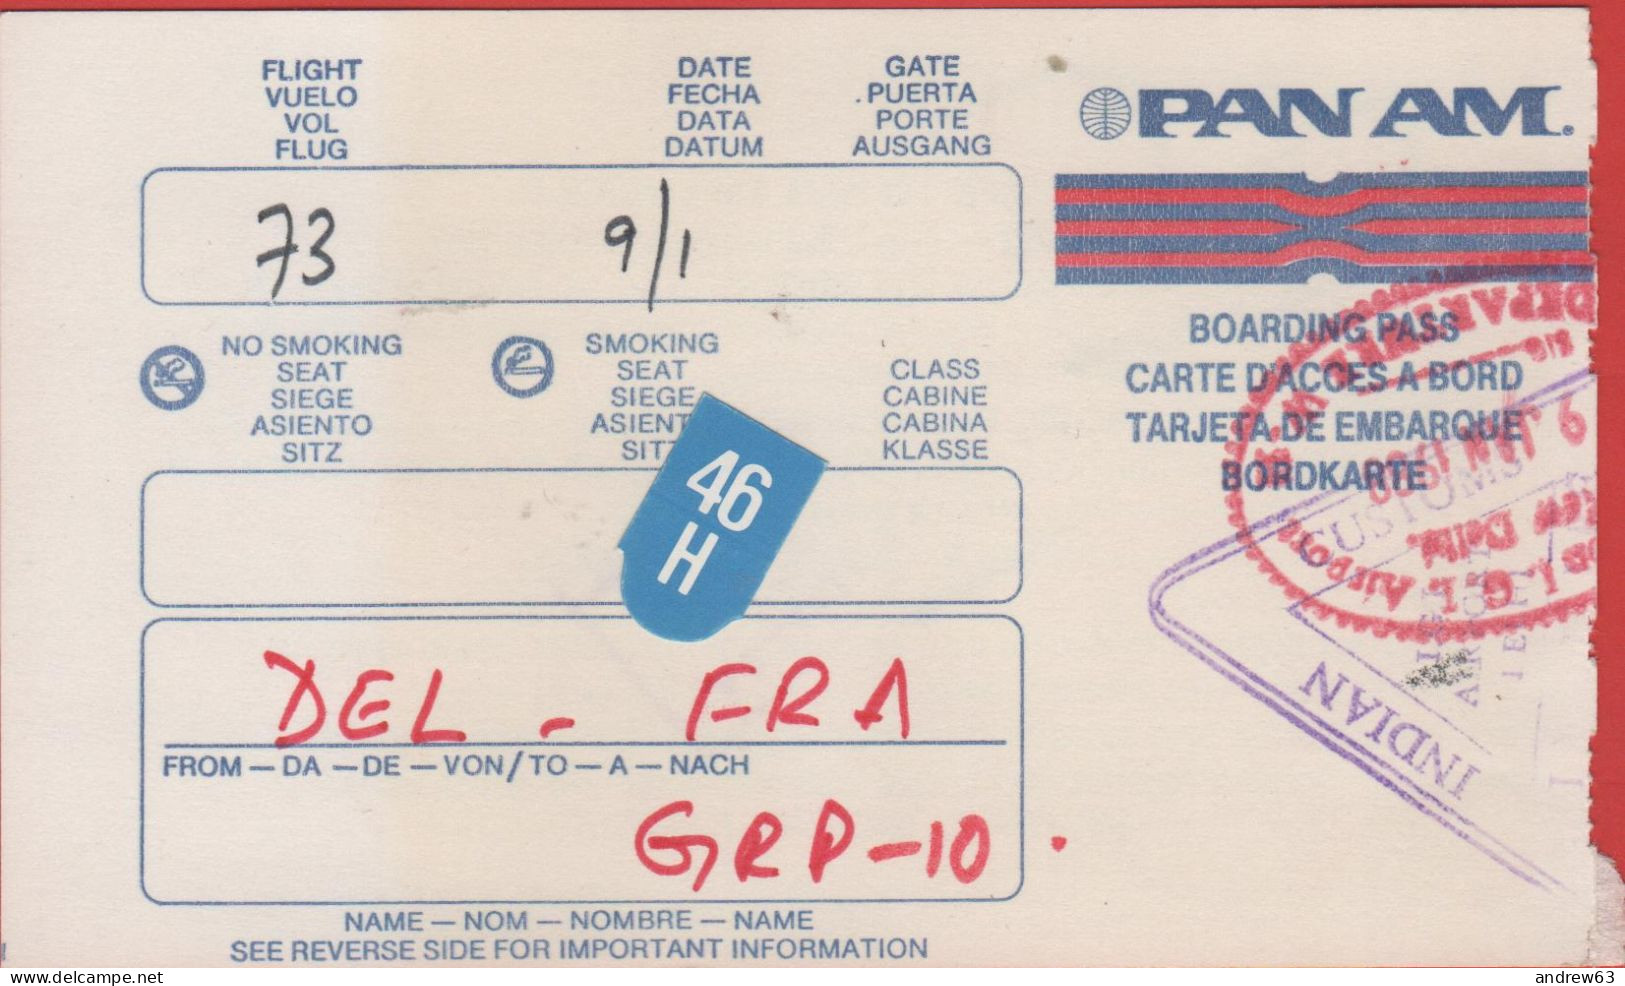 USA - PAN AM - DEL-FRA - Carta D'Imbarco - Boarding Pass - World